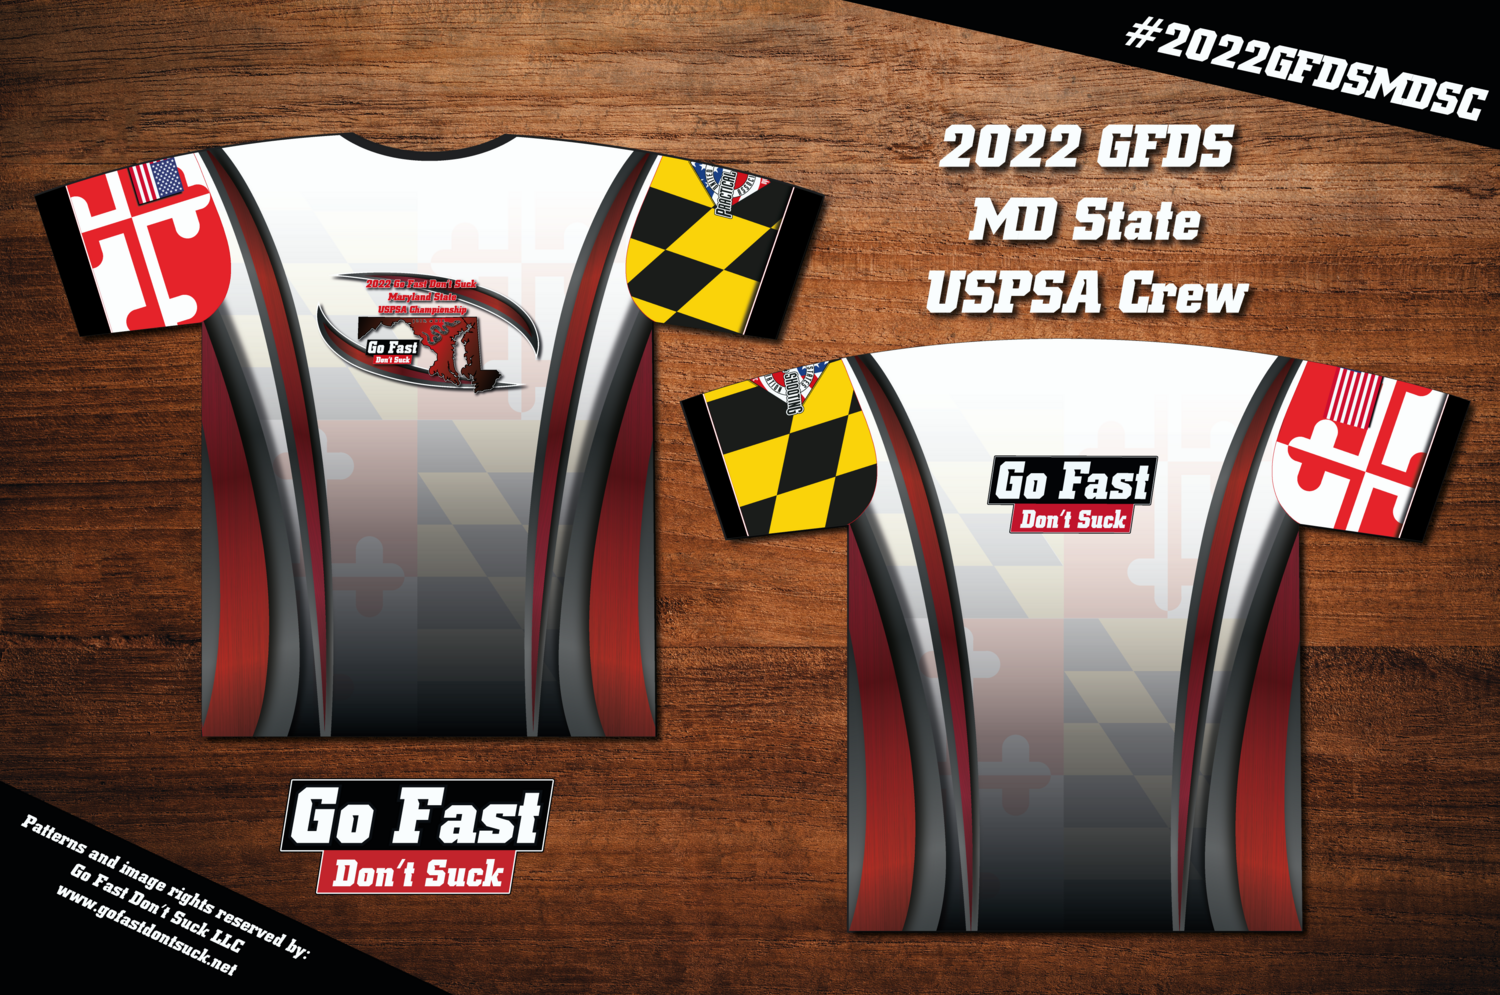 2022 GFDS Maryland State USPSA Championship - Crew Neck Jersey.